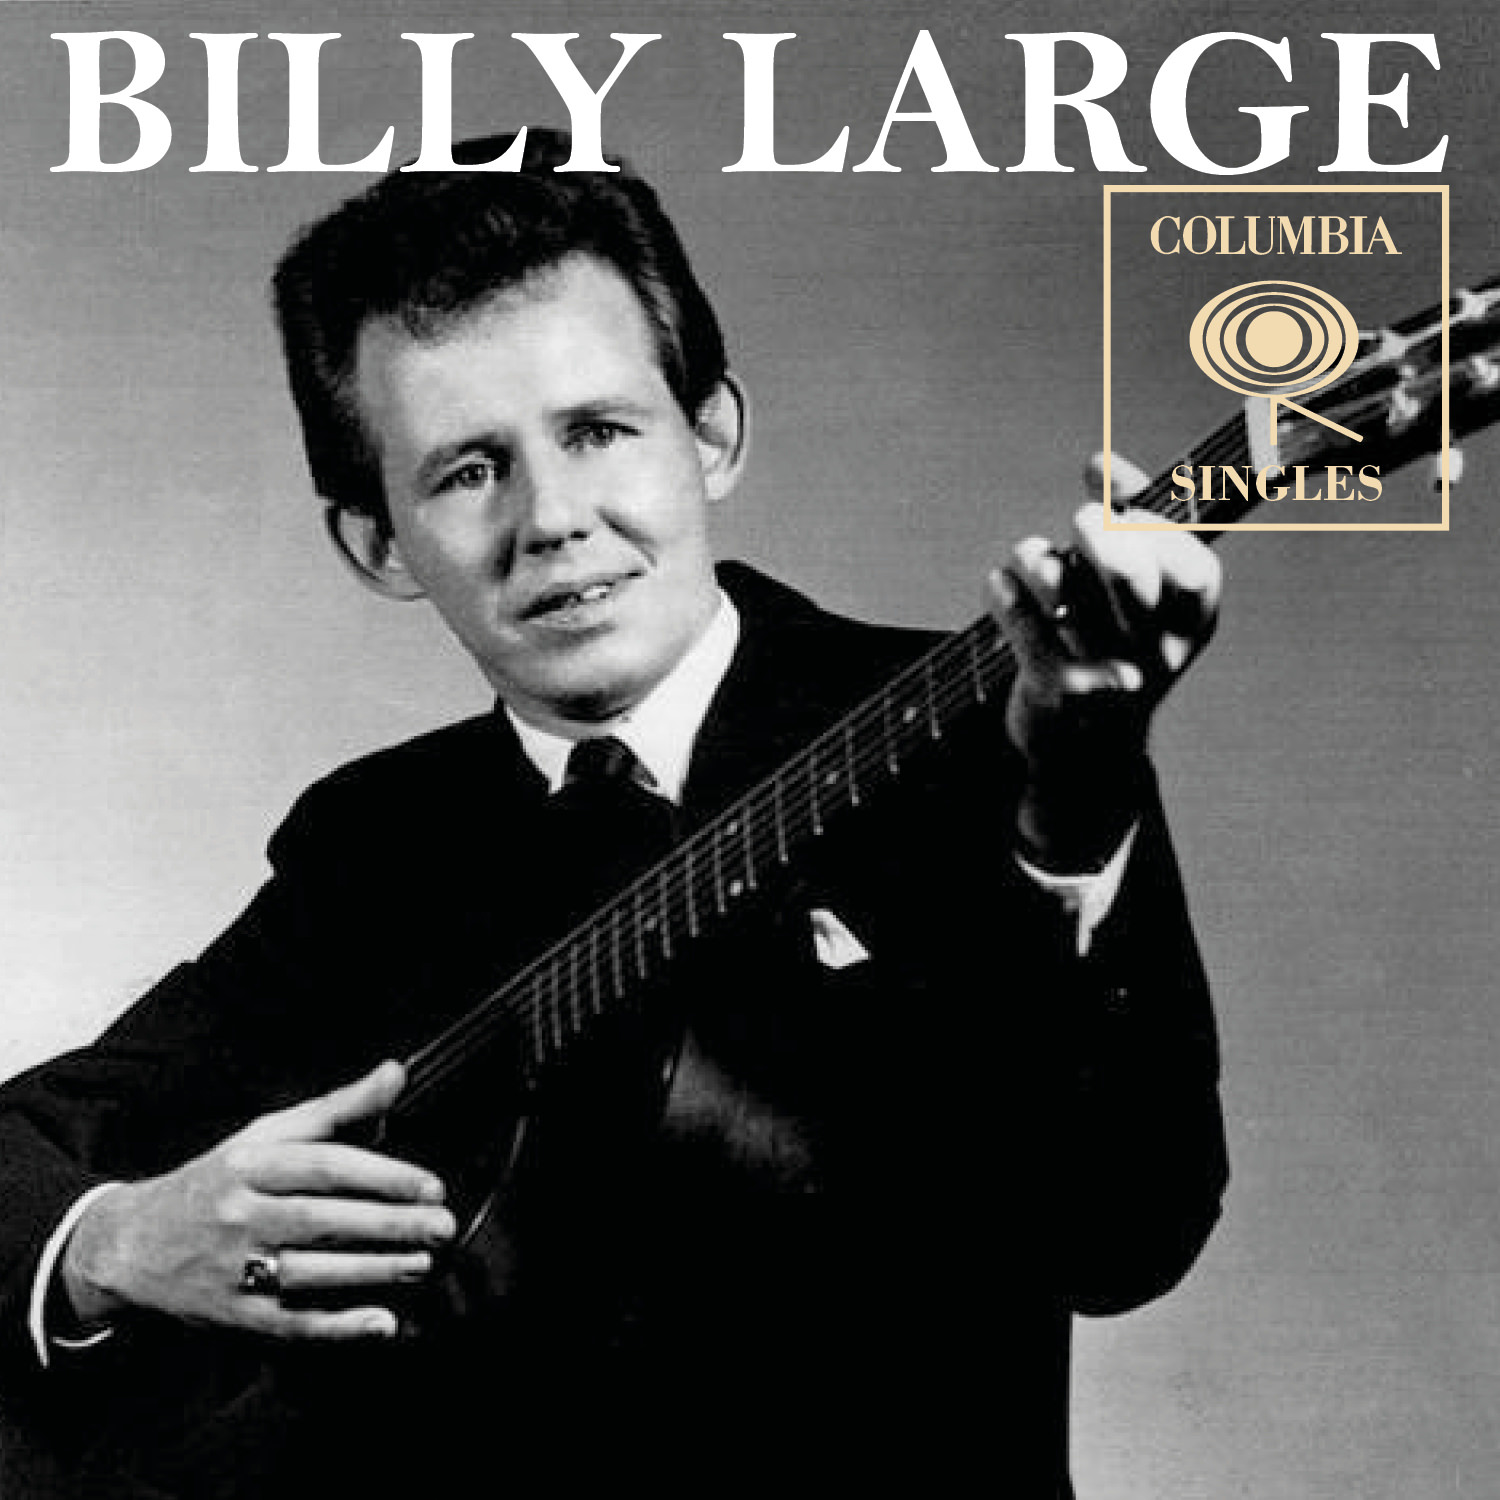 Billy Large - Columbia Singles (2017) [HDTracks FLAC 24bit/192kHz]